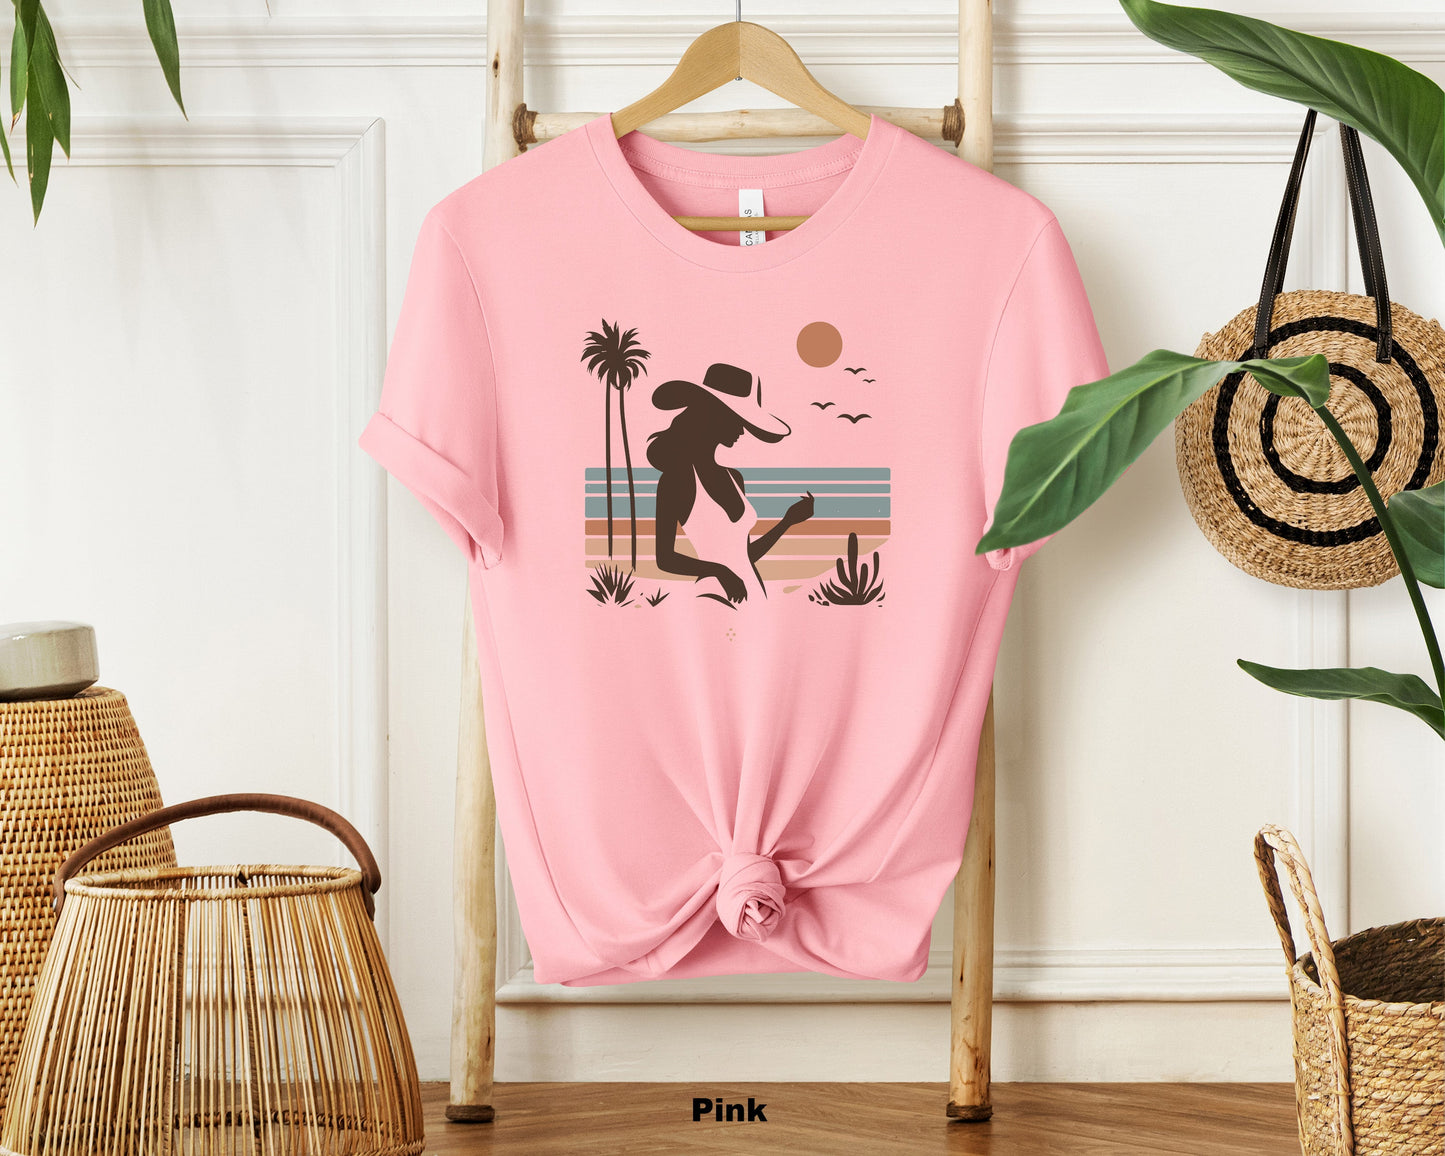 Coastal Cowgirl Crewneck T-Shirt - Seaside Serenity!